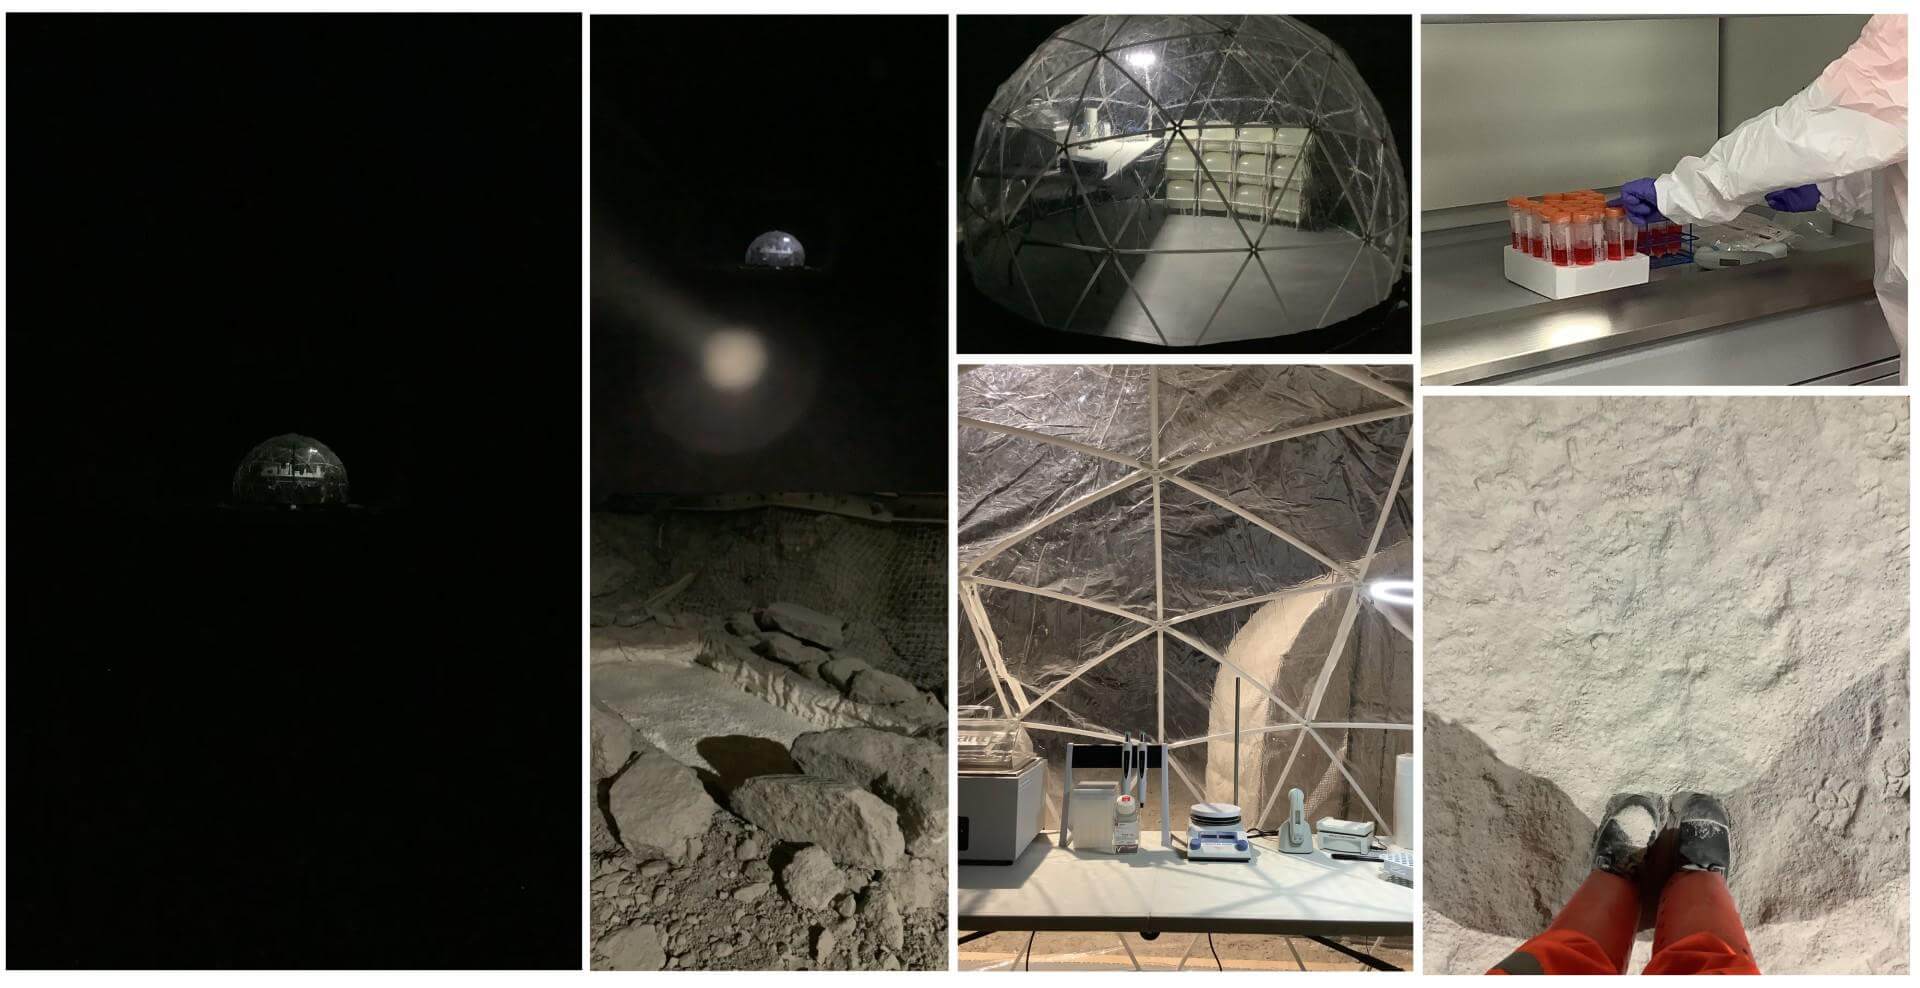 Mars underground laboratory facilities